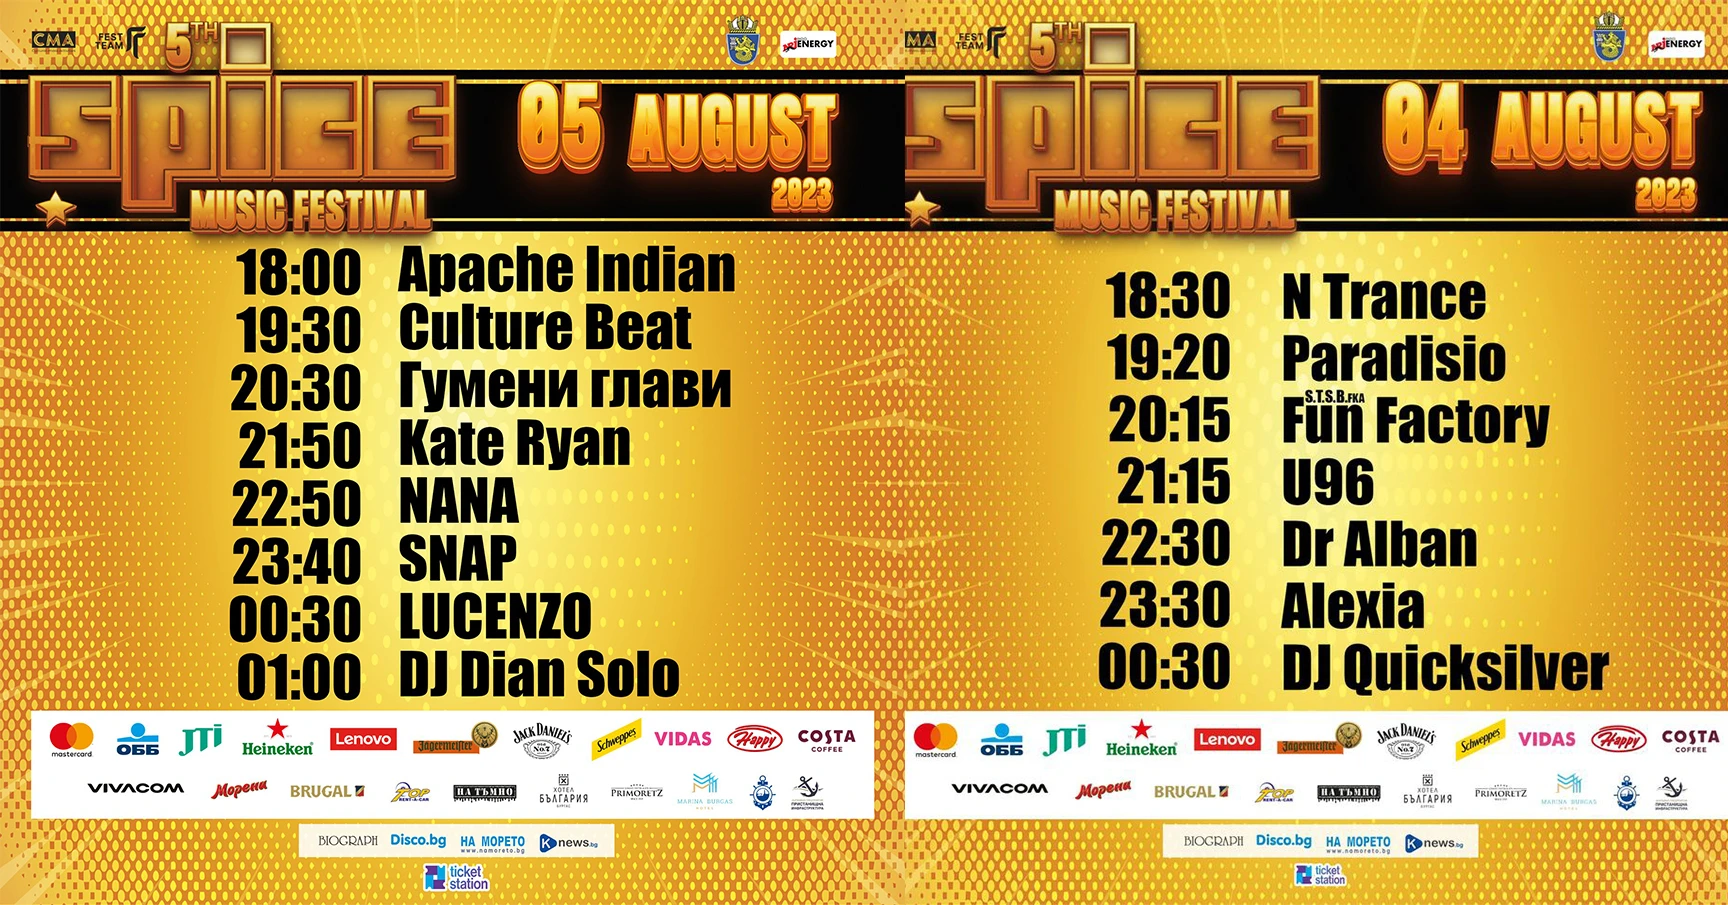 Spice Music Festival'23